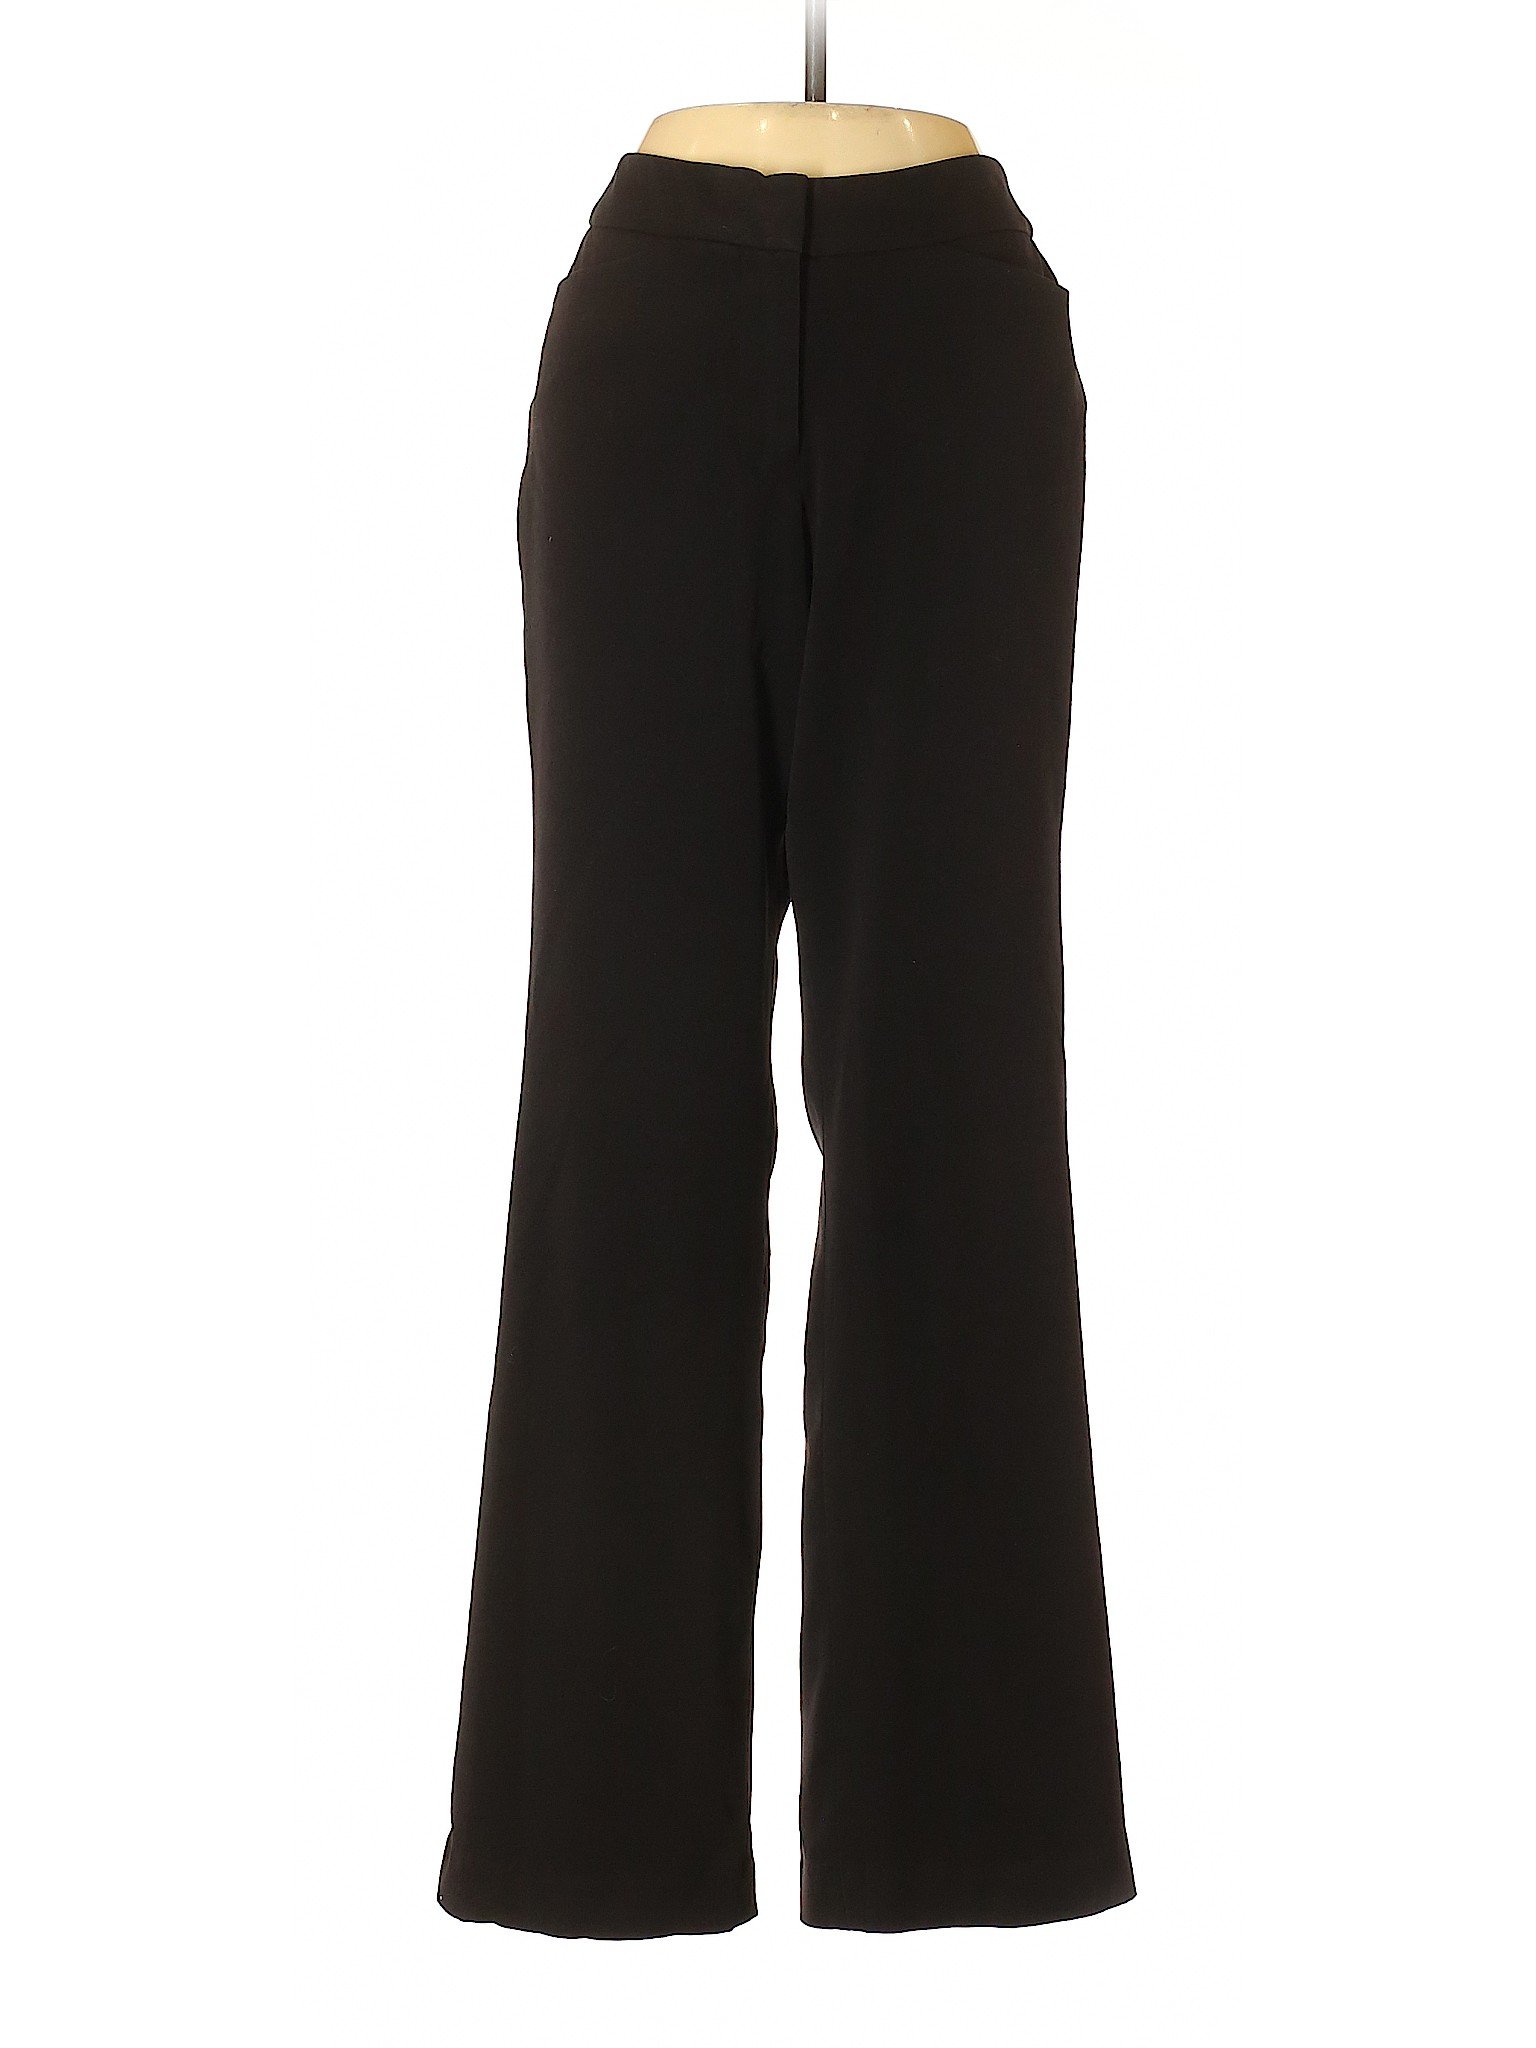 Liz Claiborne Women Black Dress Pants 4 Petites | eBay